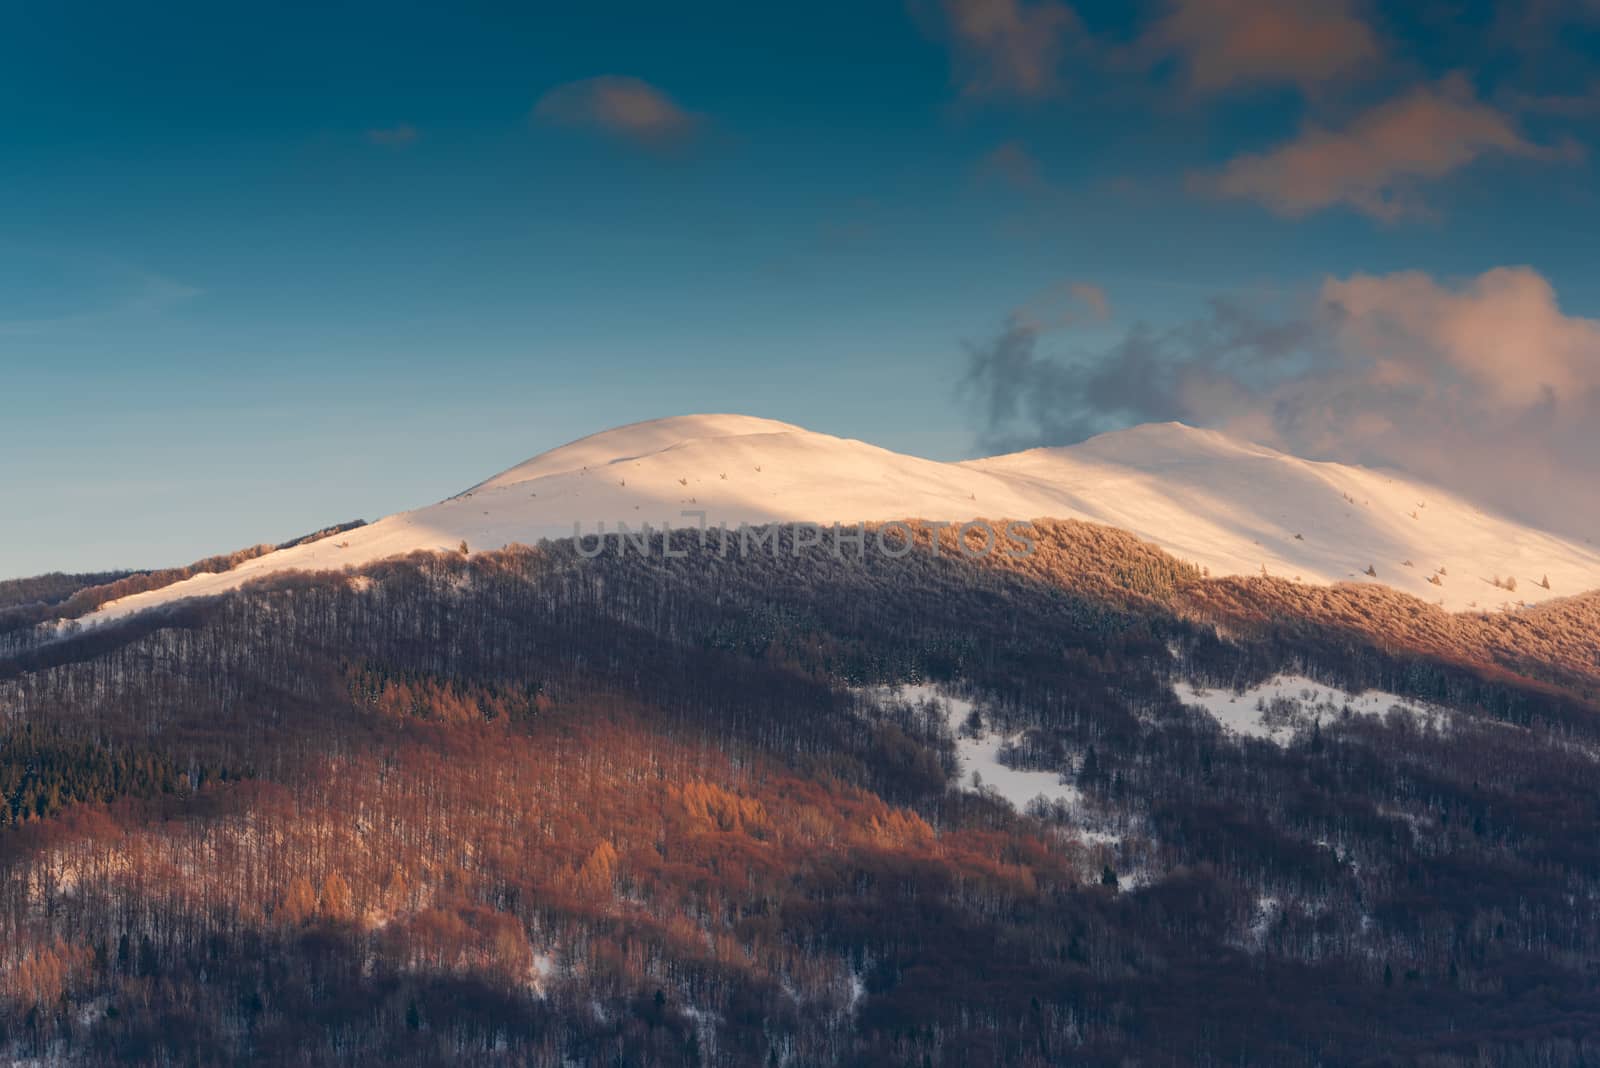 Polonyna Carynska and Wetlinska in Carpathian Mountains at Winte by merc67